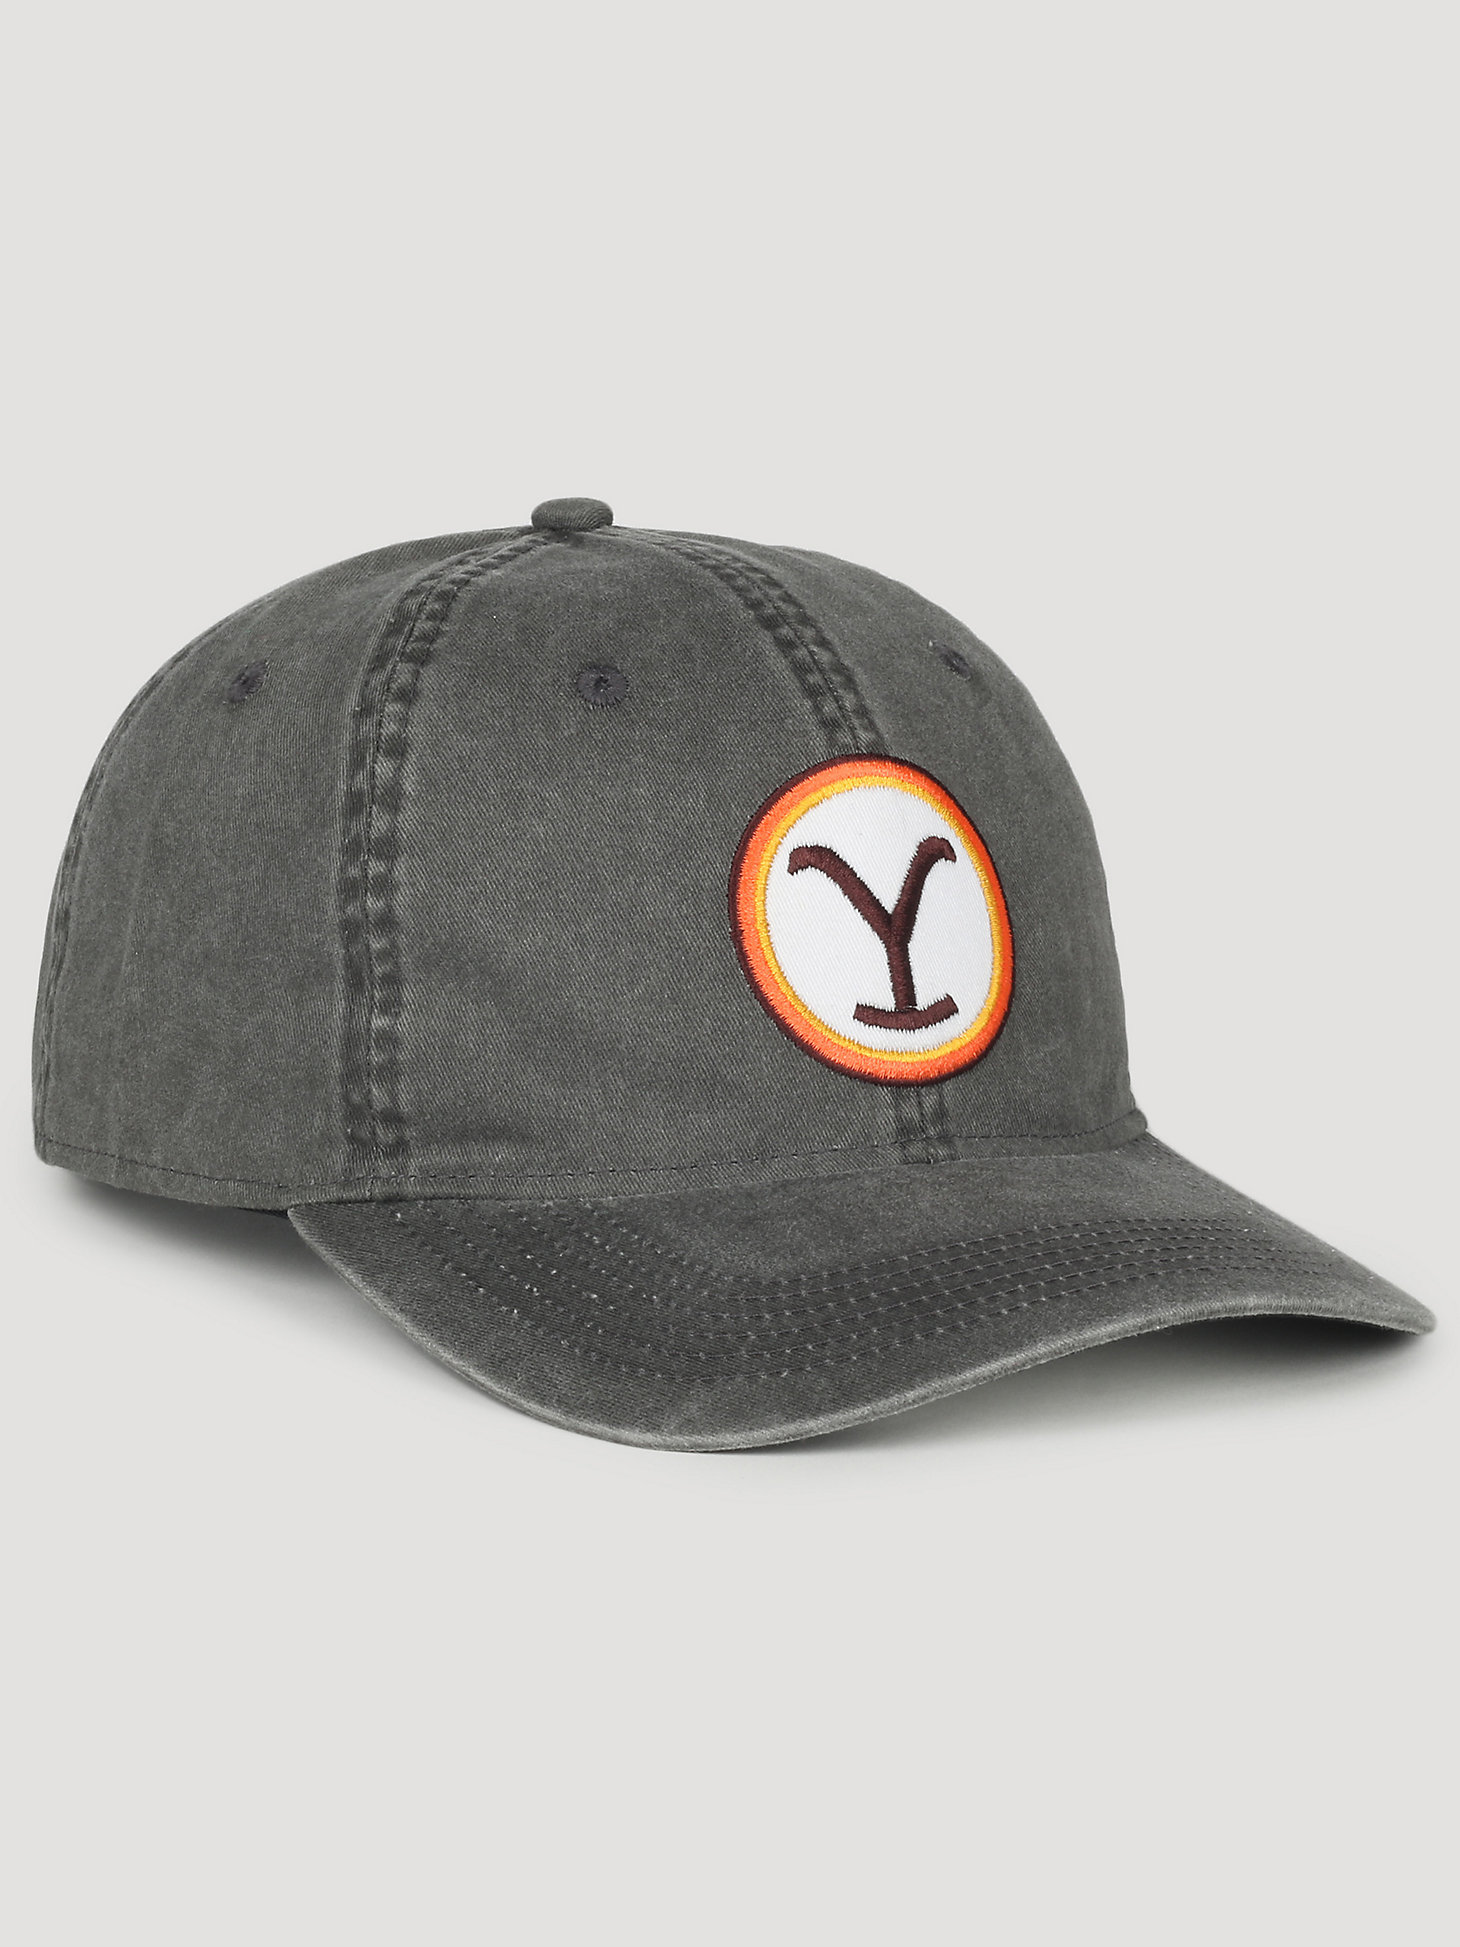 Wrangler x Yellowstone Men's Logo Cap in Black alternative view 1